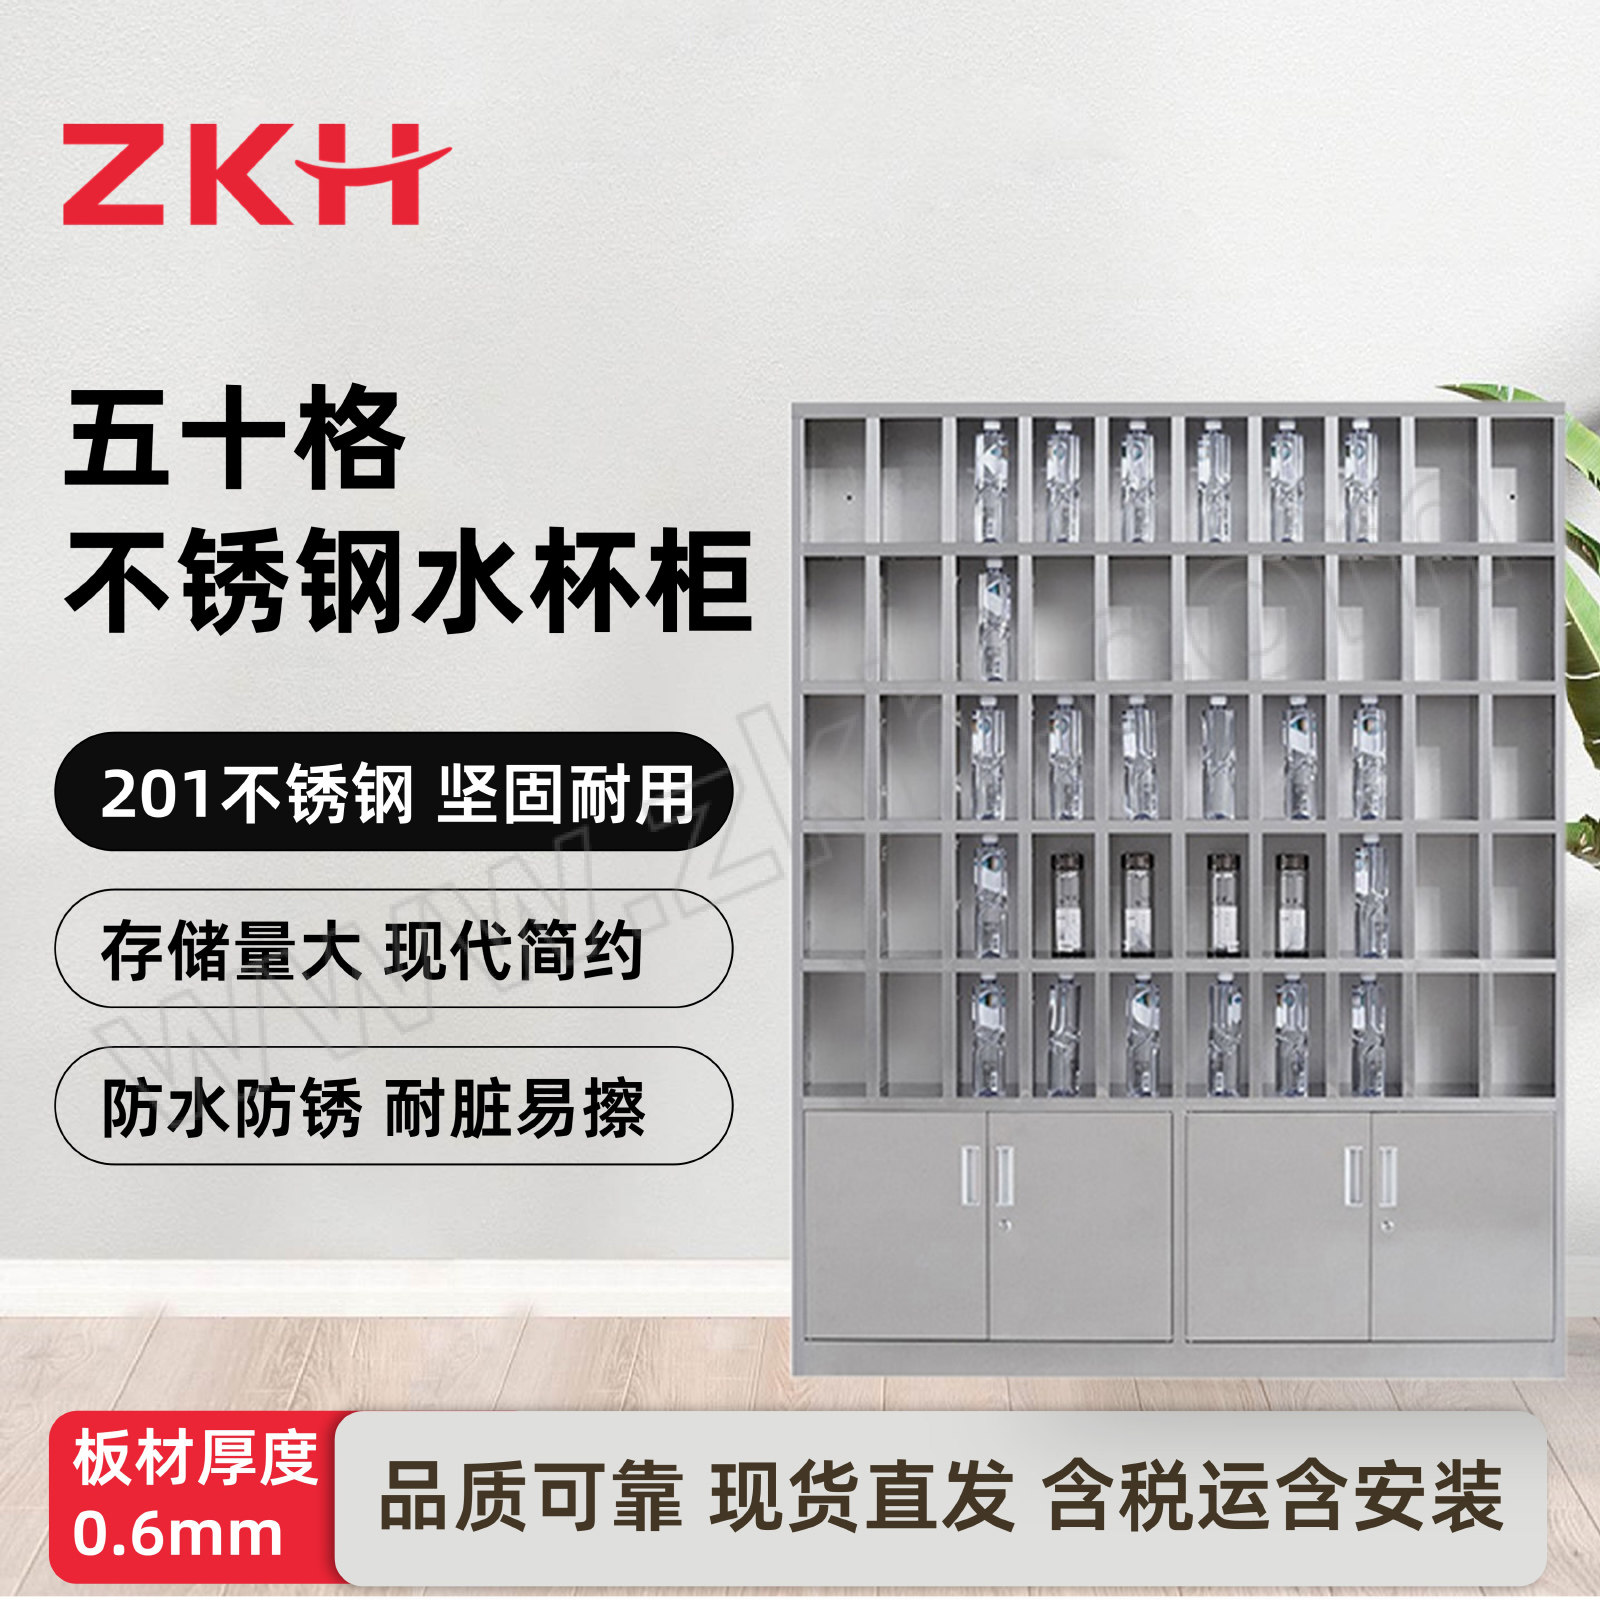 ZKH/震坤行 不锈钢50格水杯柜 HZJ-BXG-O5 尺寸1500×250×1800mm 1台